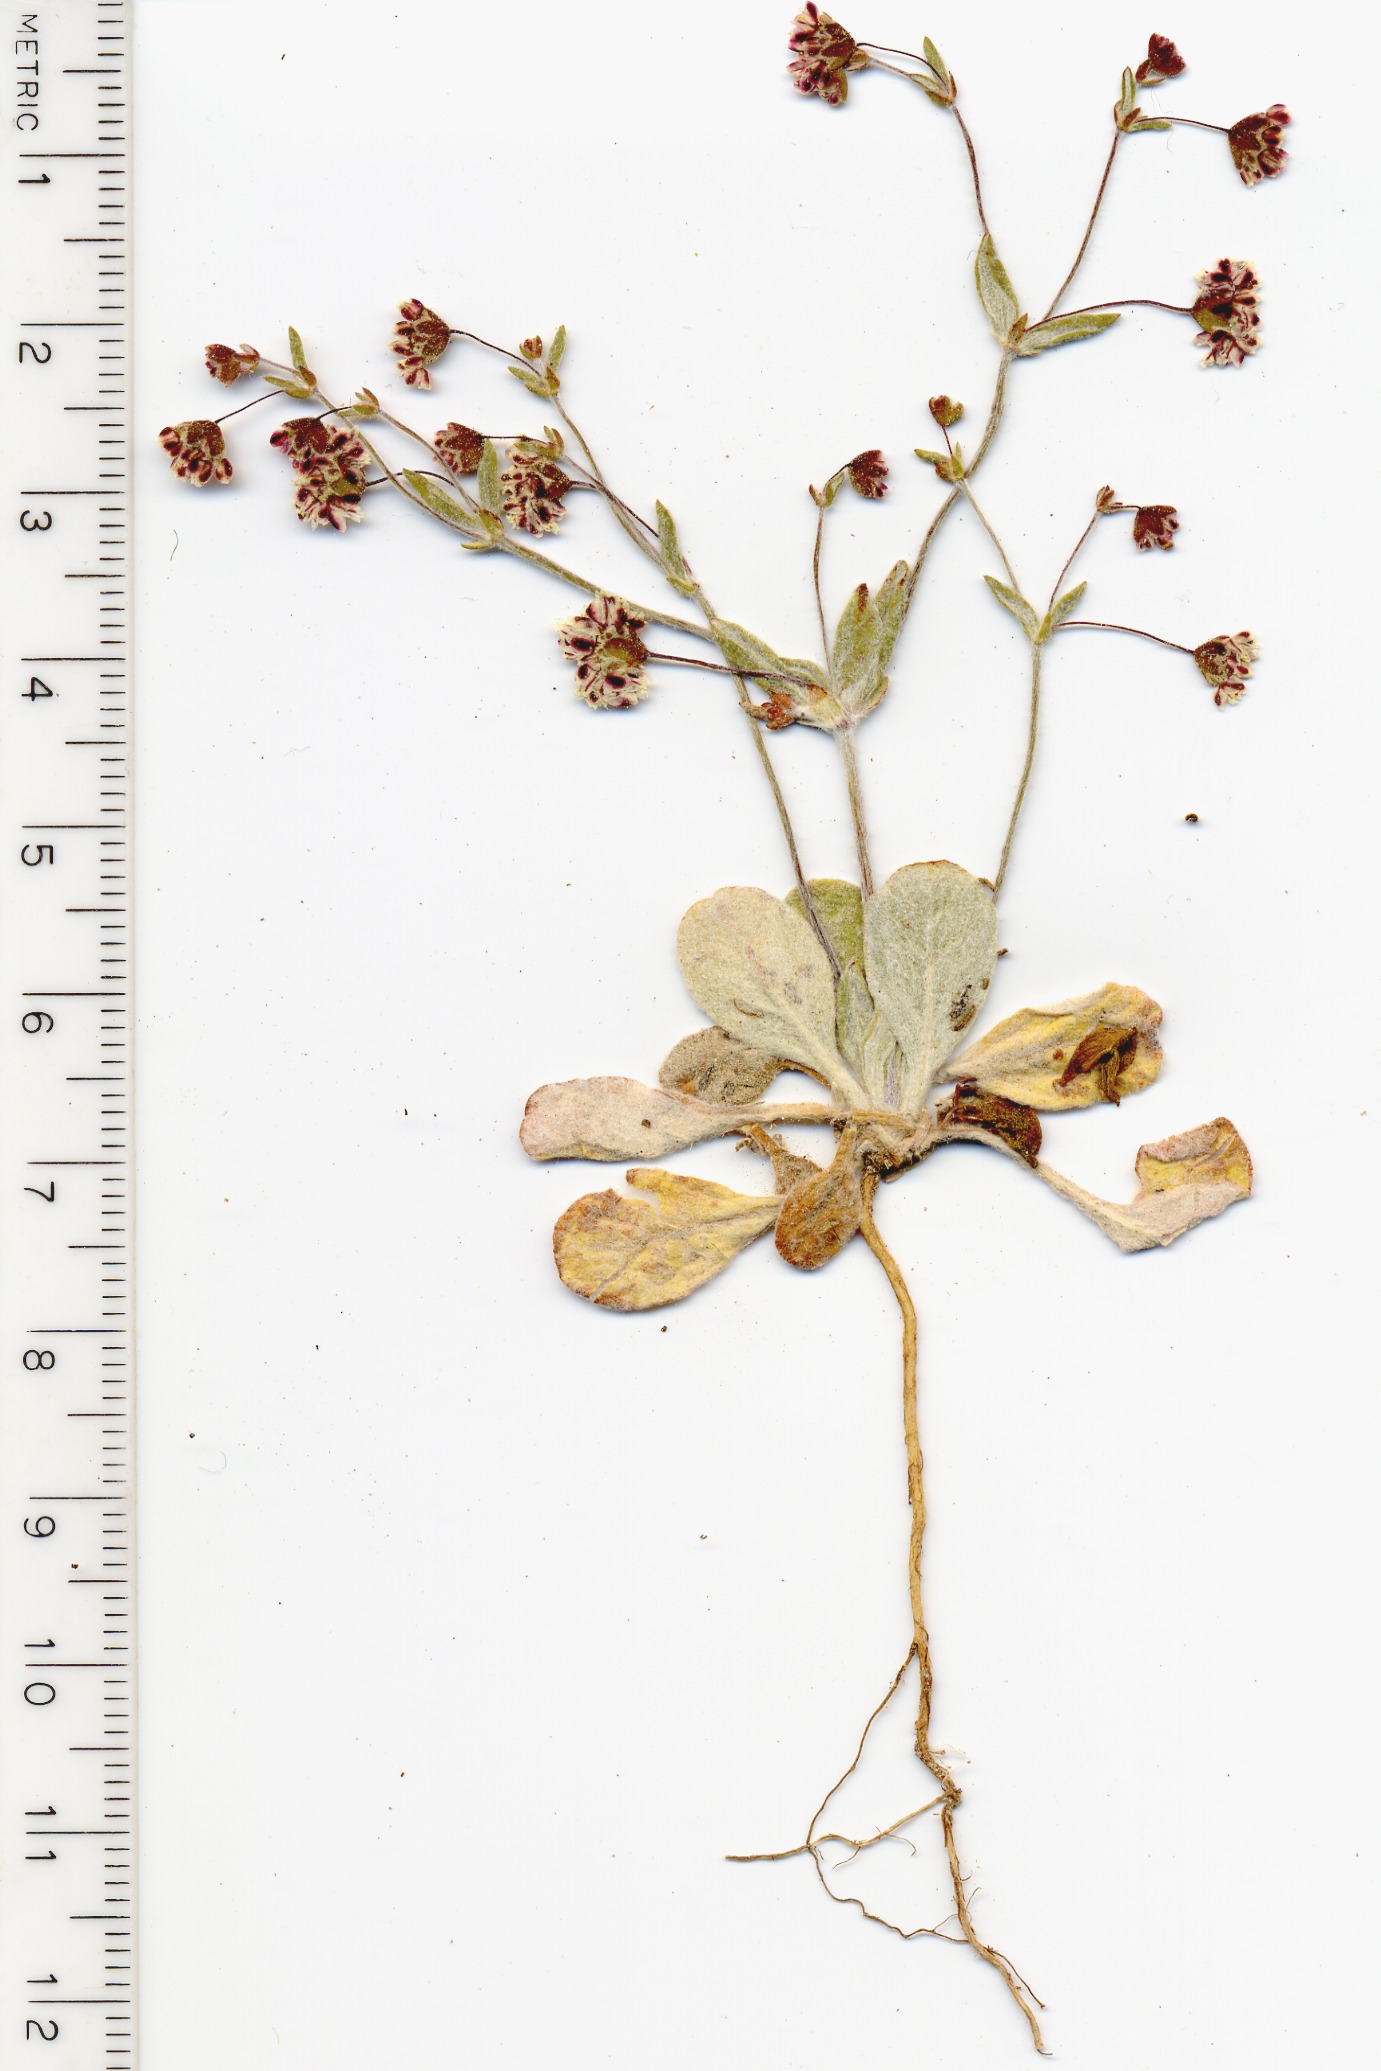 Eriogonum maculatum, Polygonaceae, Mesquite Mountains, San Bernardino, County, California